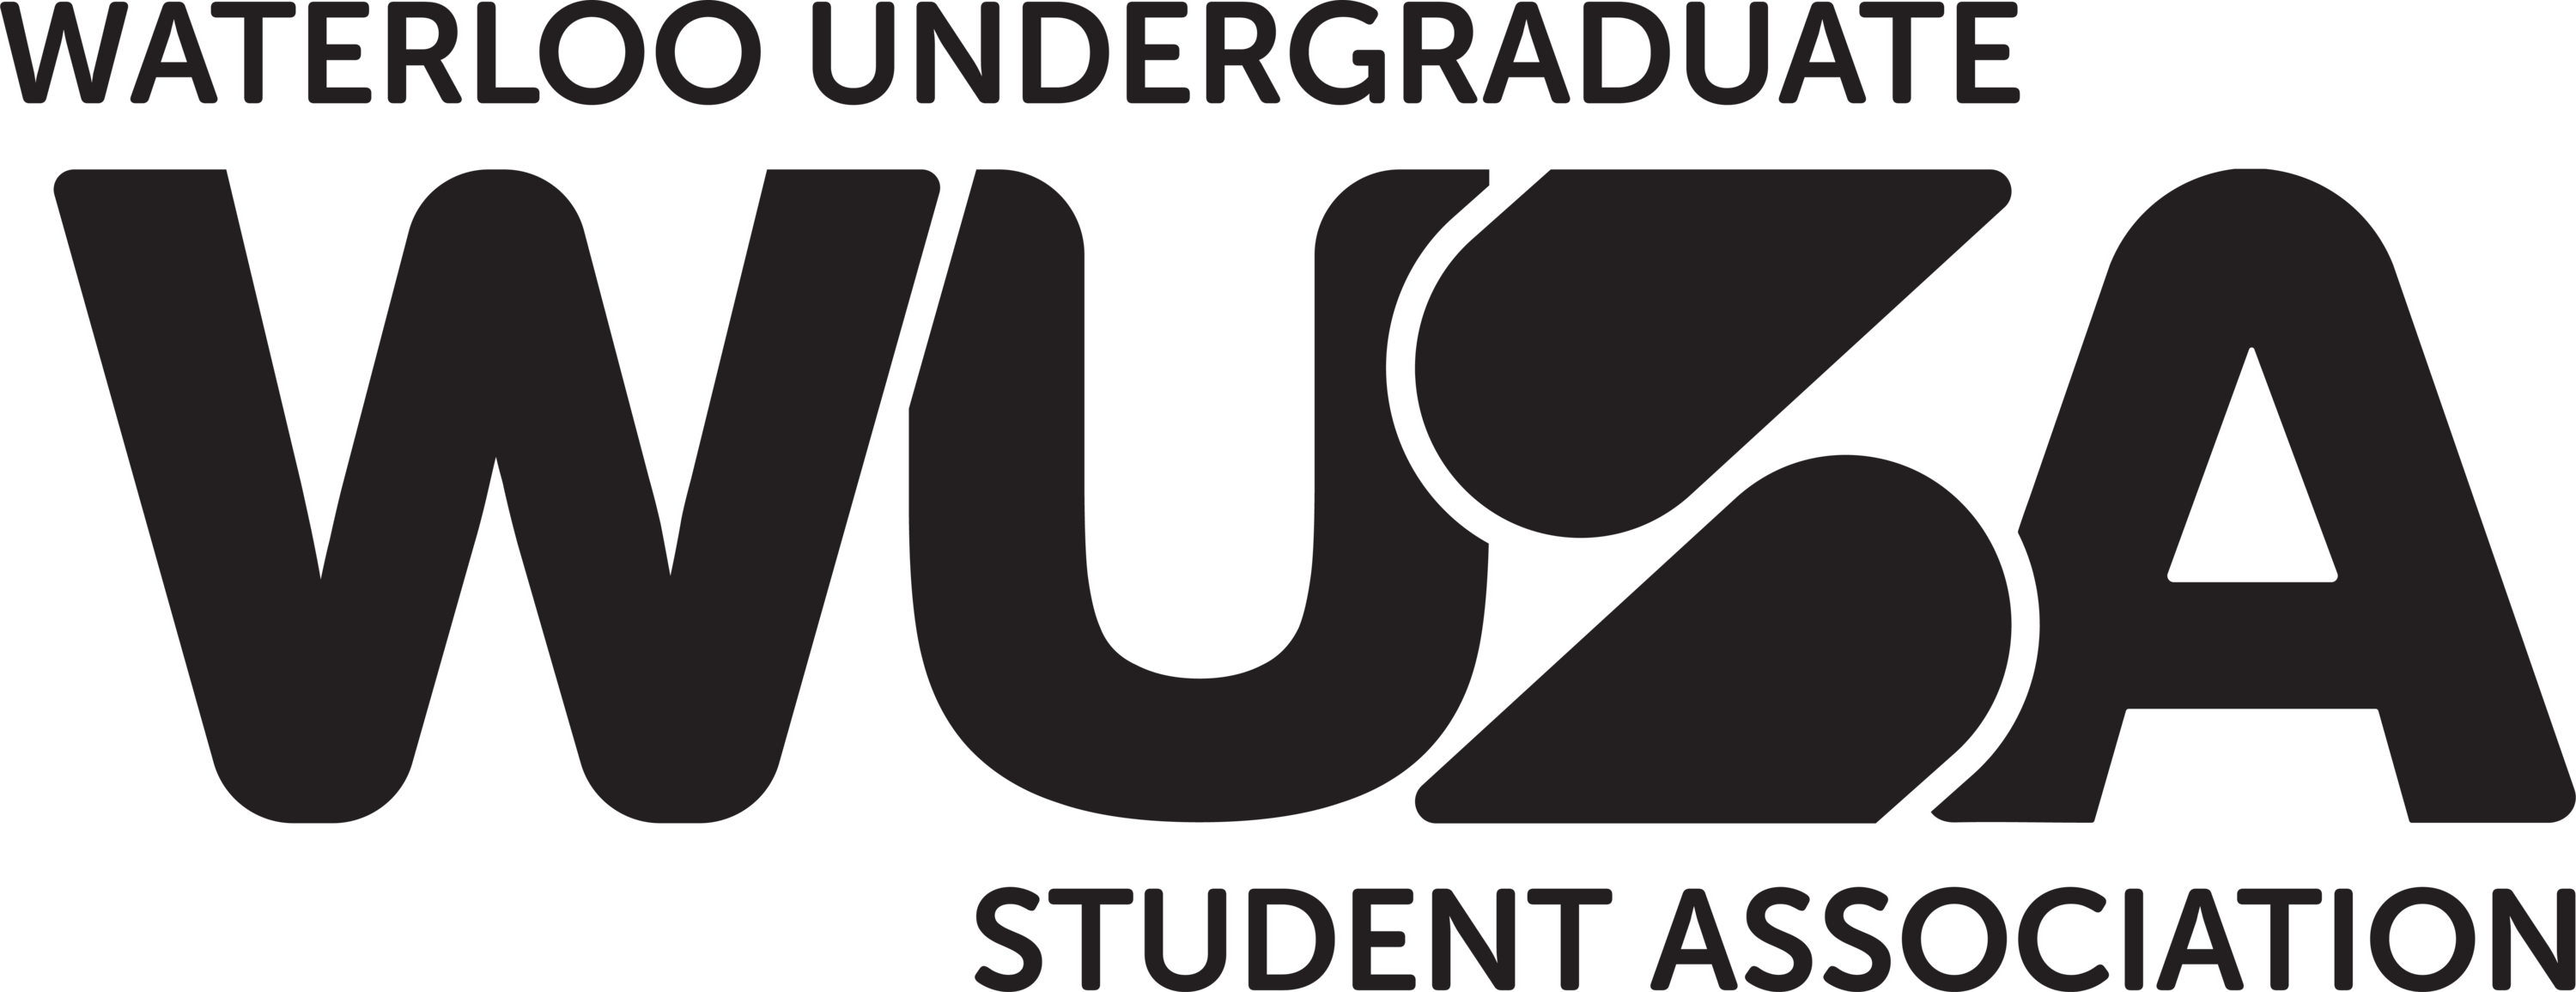 Waterloo Undergraduate Student Association Logo